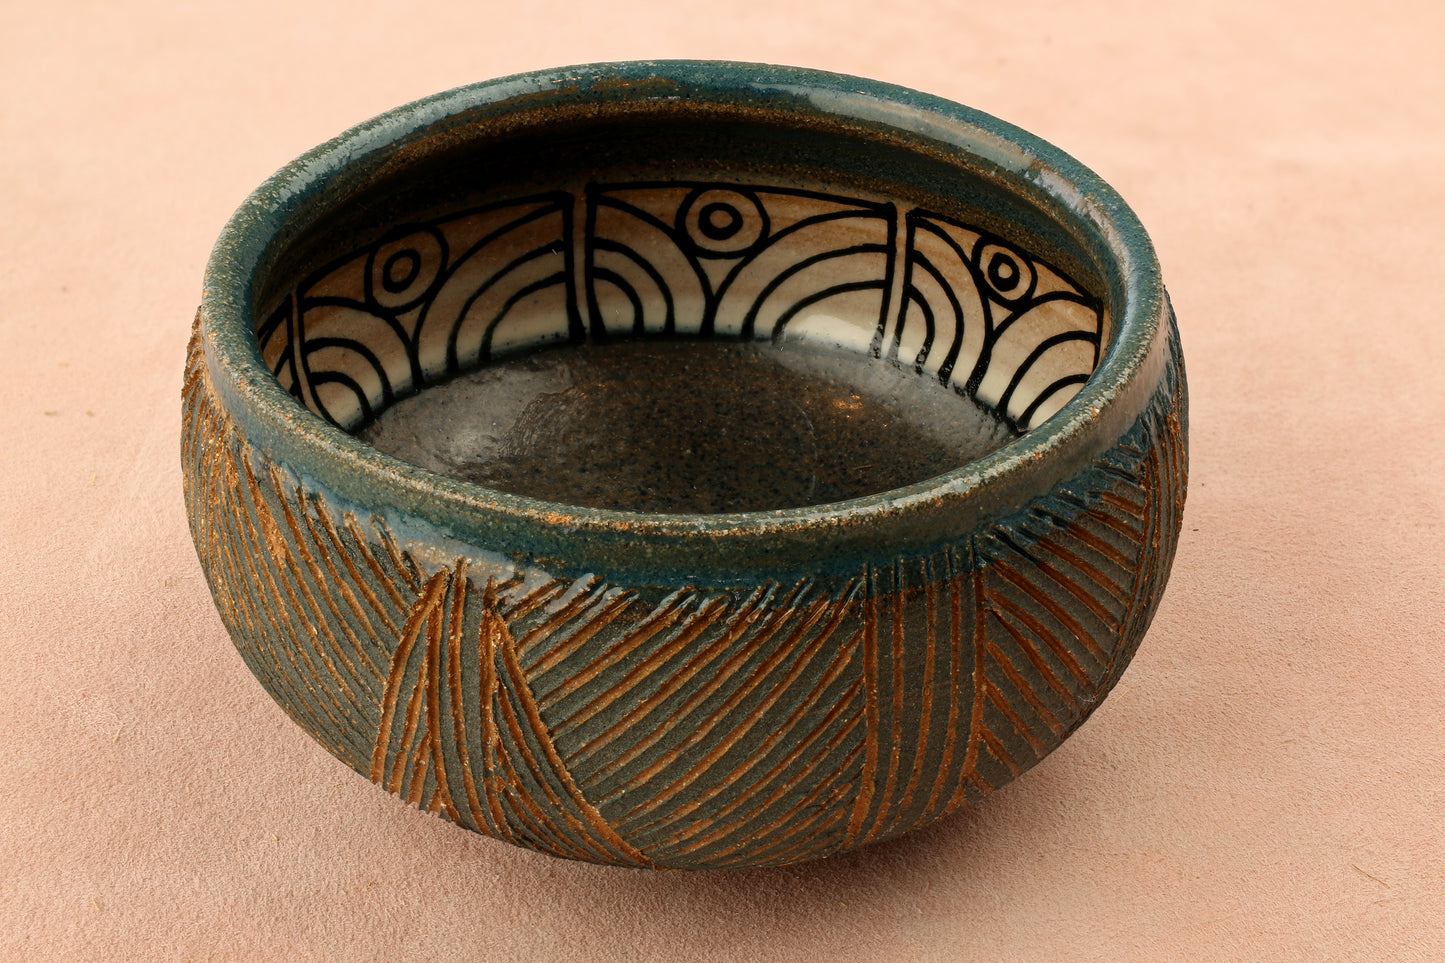 Vintage Studio Pottery (set of 2 bowls)